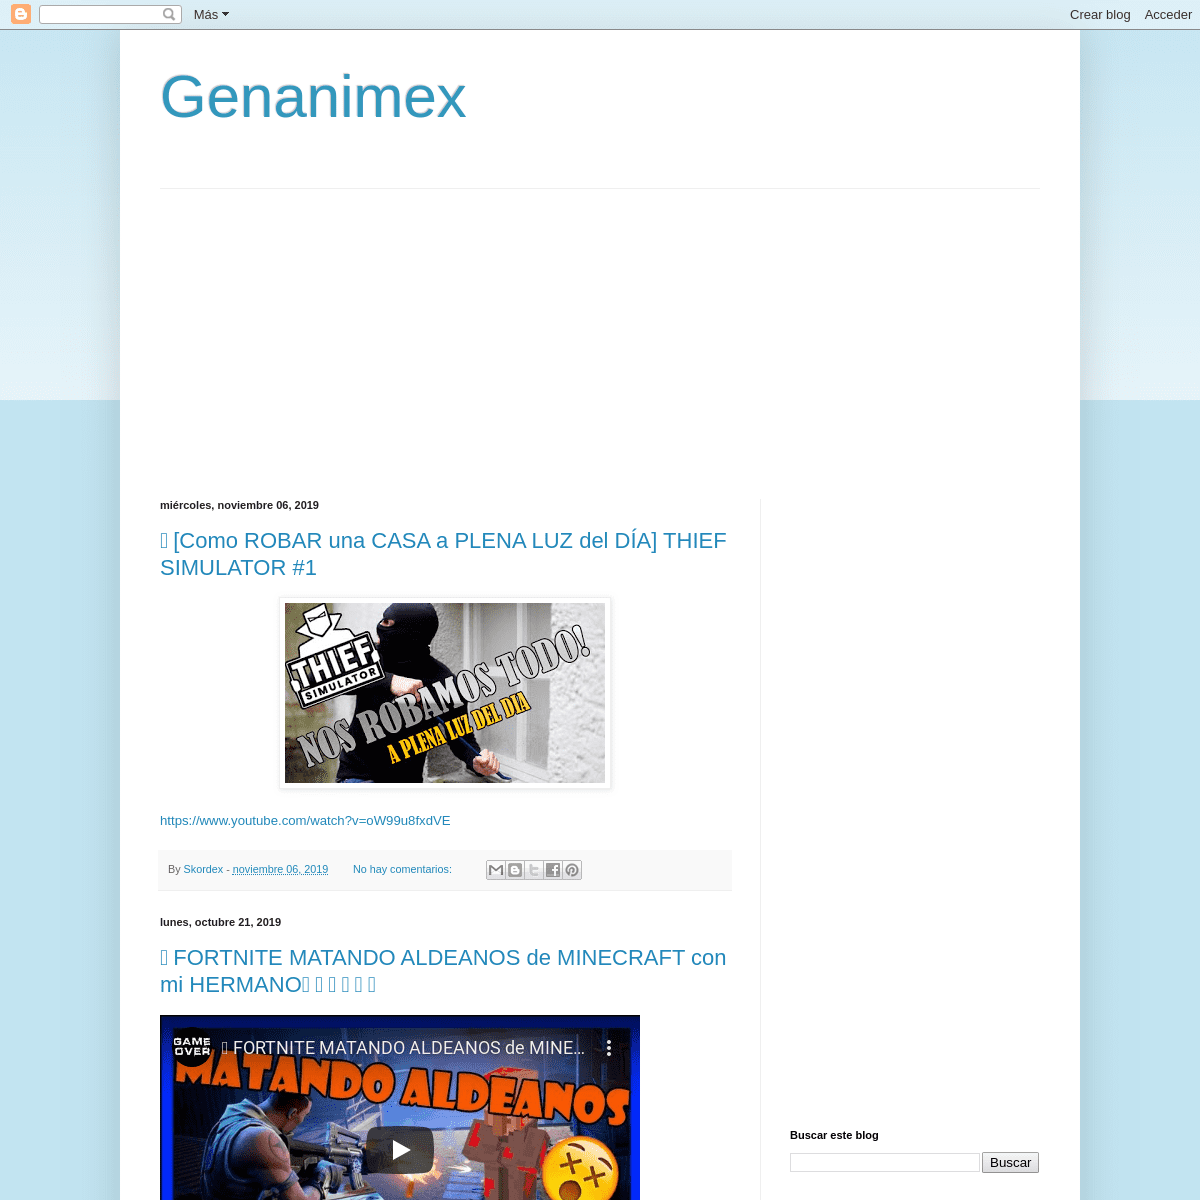 A complete backup of genanimex.blogspot.com